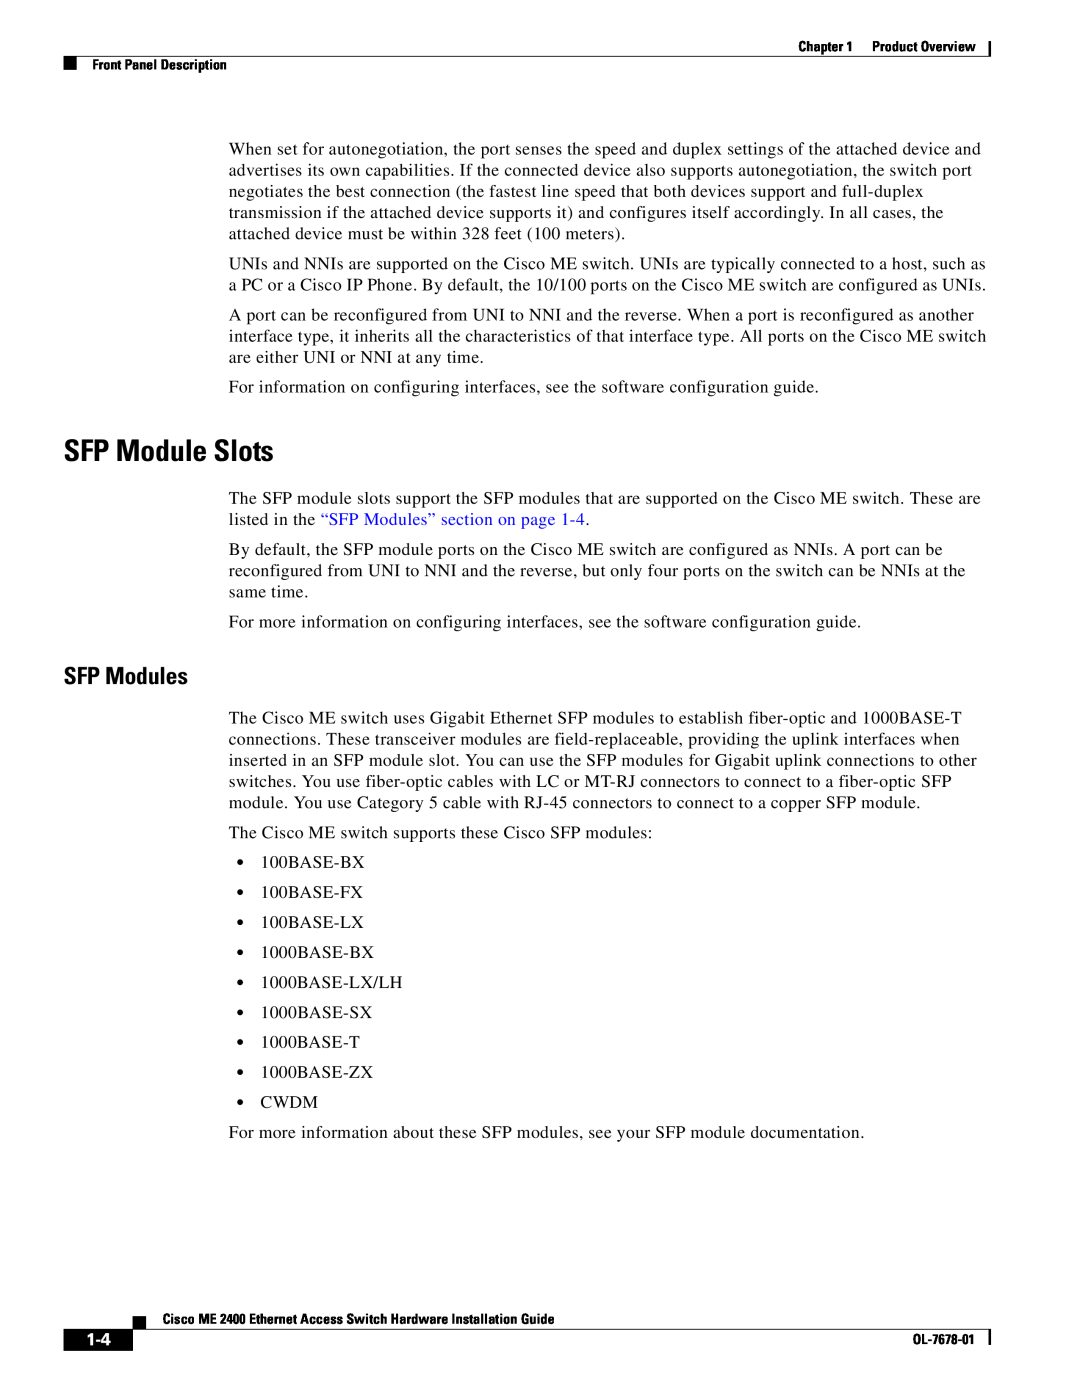 Cisco Systems ME 2400 manual SFP Module Slots, SFP Modules 